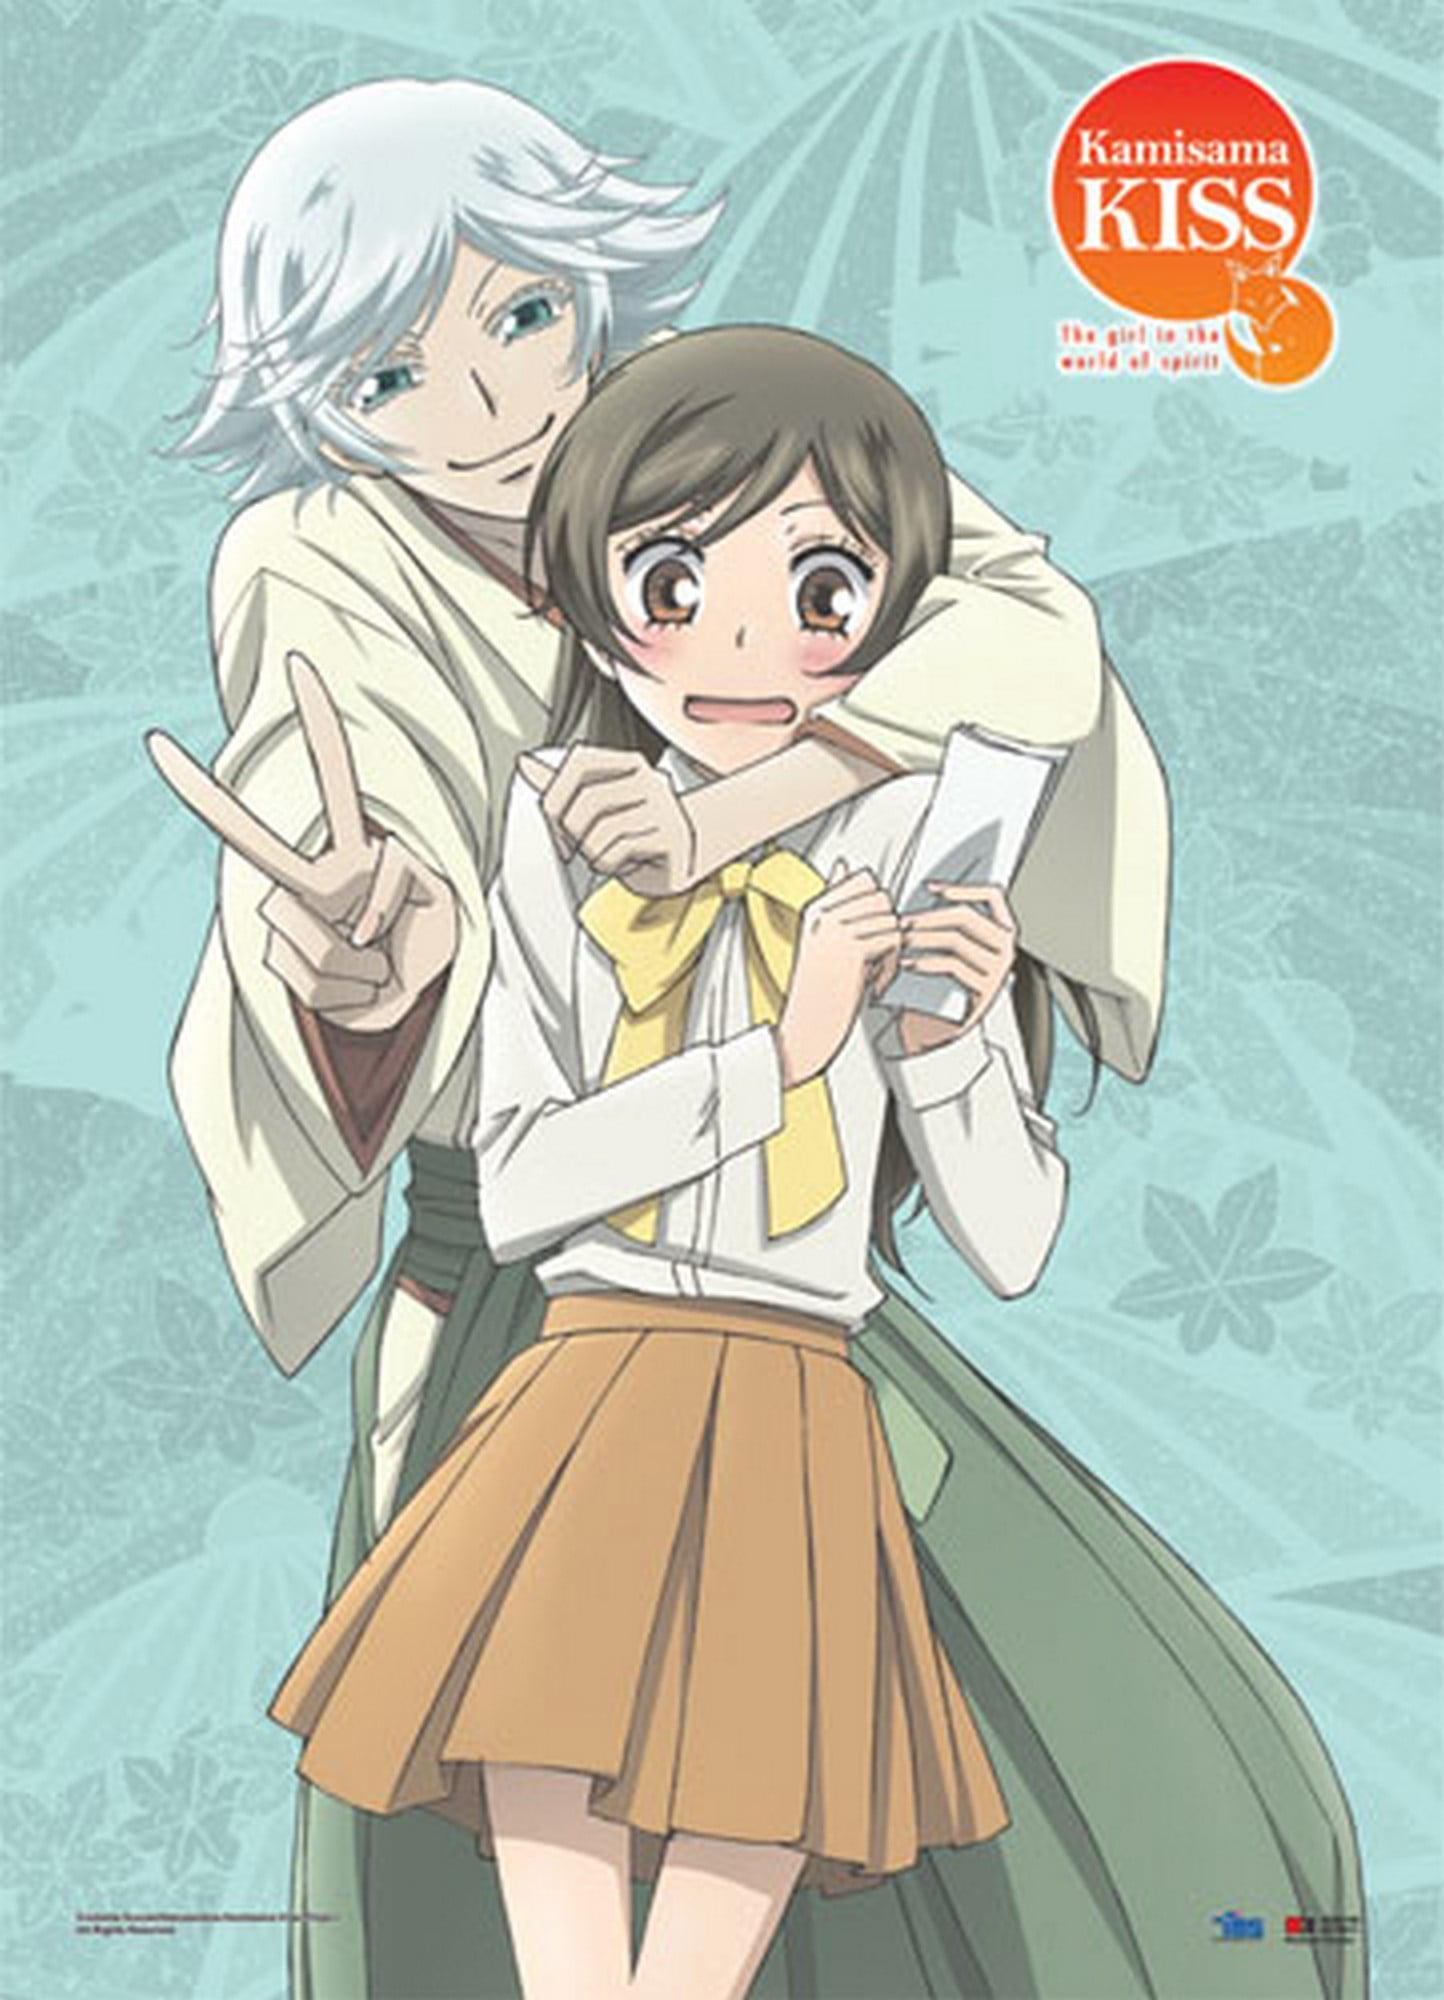 Anime Kamisama Ni Natta Hi Kyouko Izanami 1 Poster Decorative